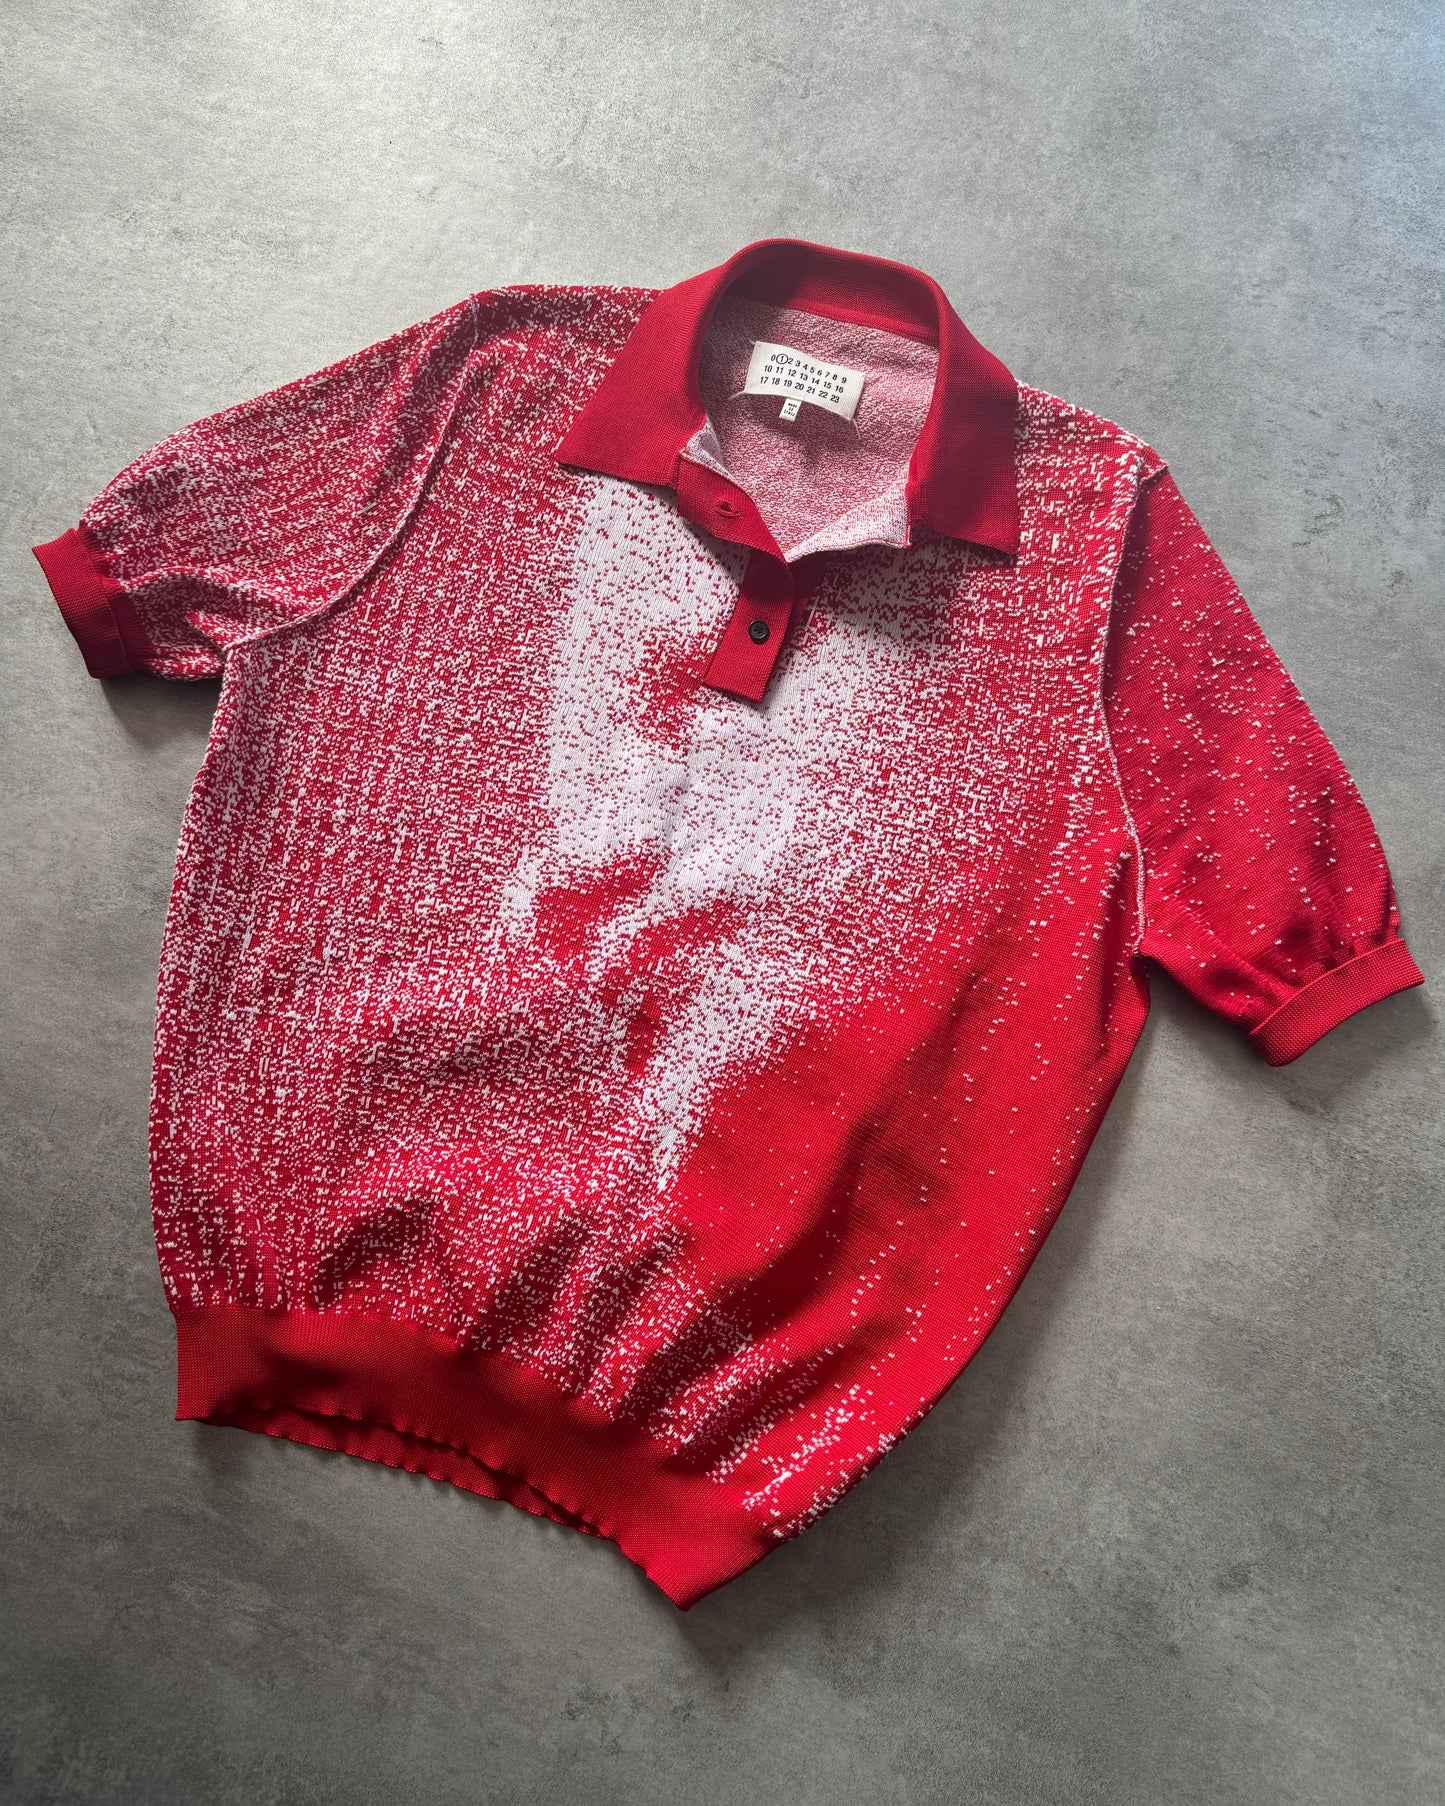 SS2017 Maison Margiela Pixelized Red Human Polo Shirt (S) - 2